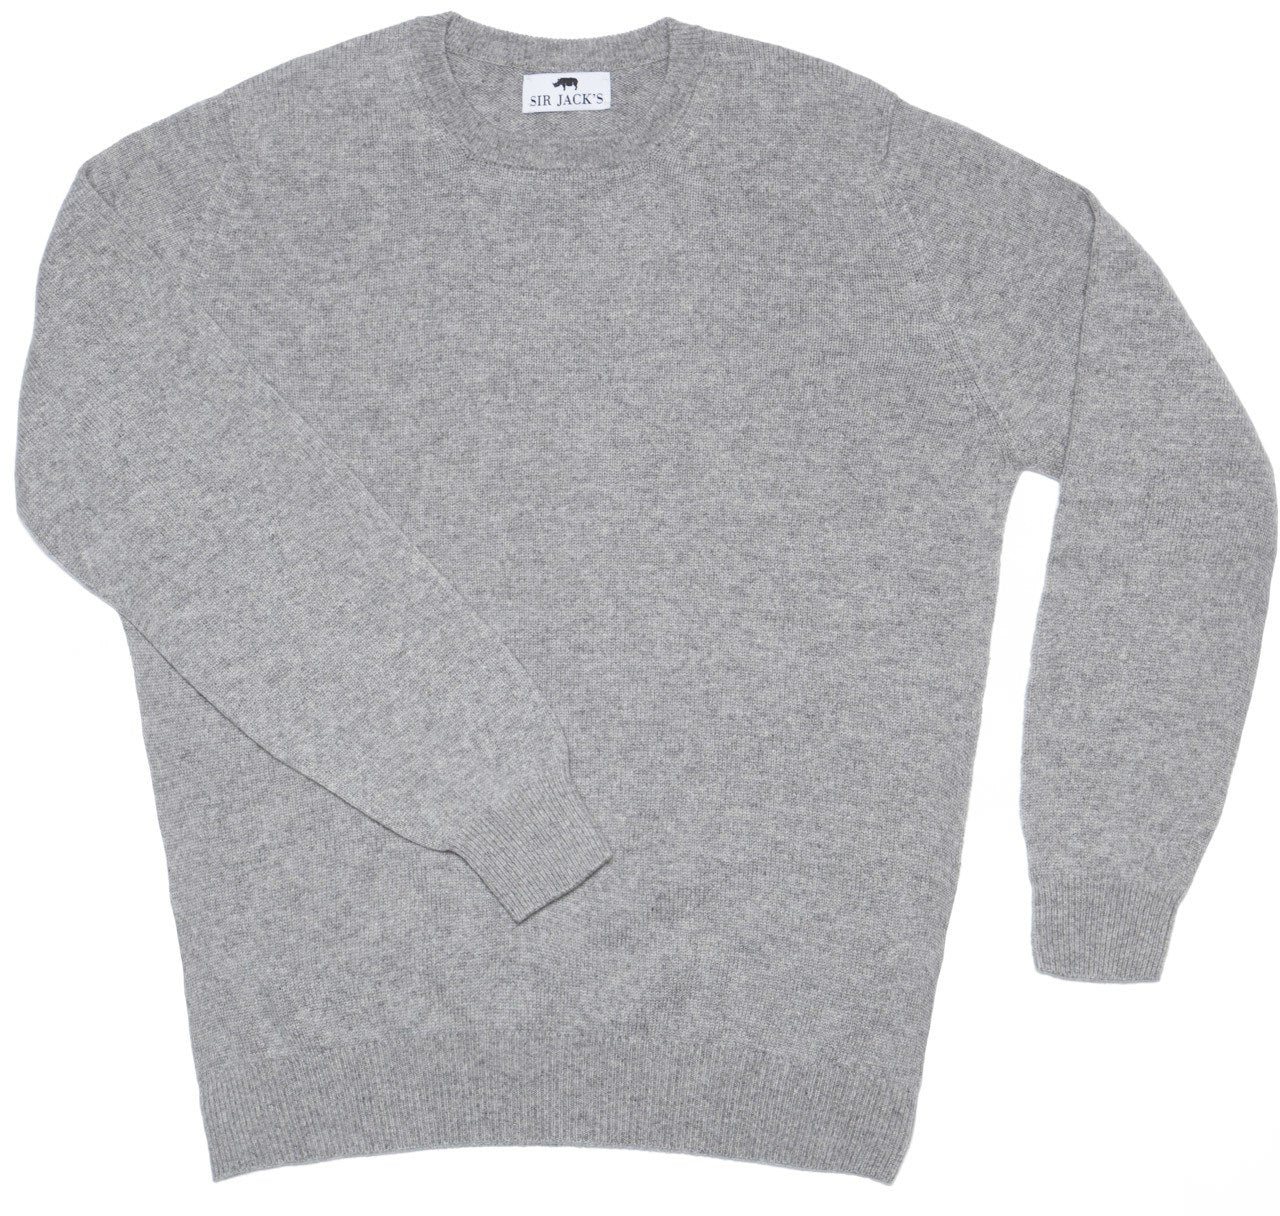 Sir Jack's Cashmere Crewneck Sweater in Grey